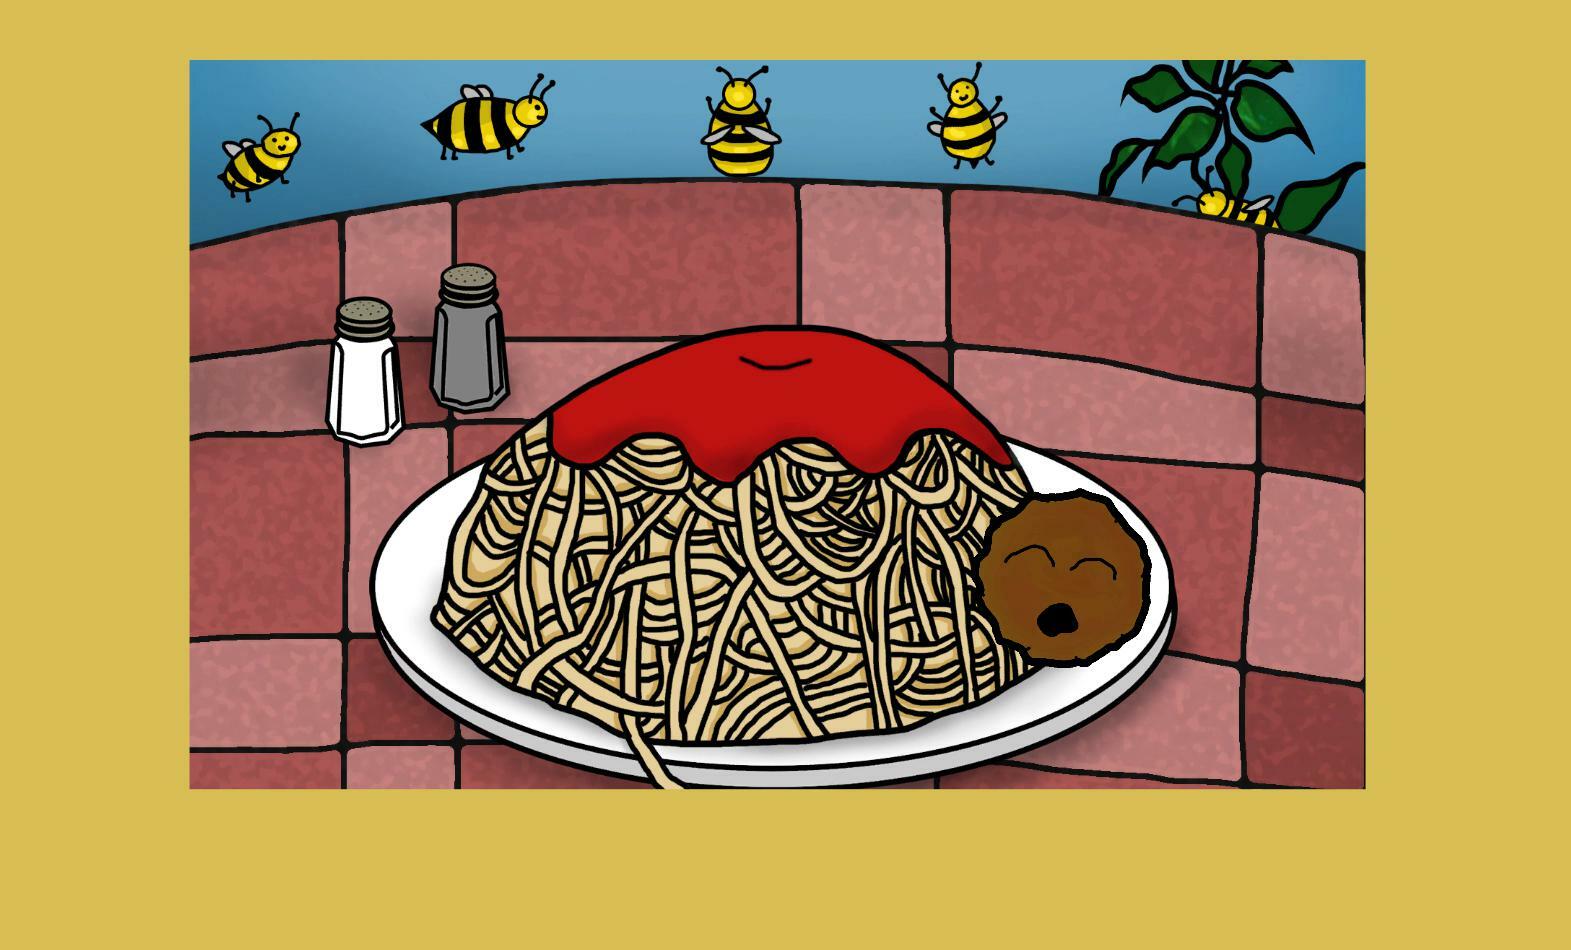 Скачай взломанный спагетти. Игра про спагетти Холи БАМ. Holy BAAM спагетти. Закачай игру про спагетти. Игра про спагетти картинки.